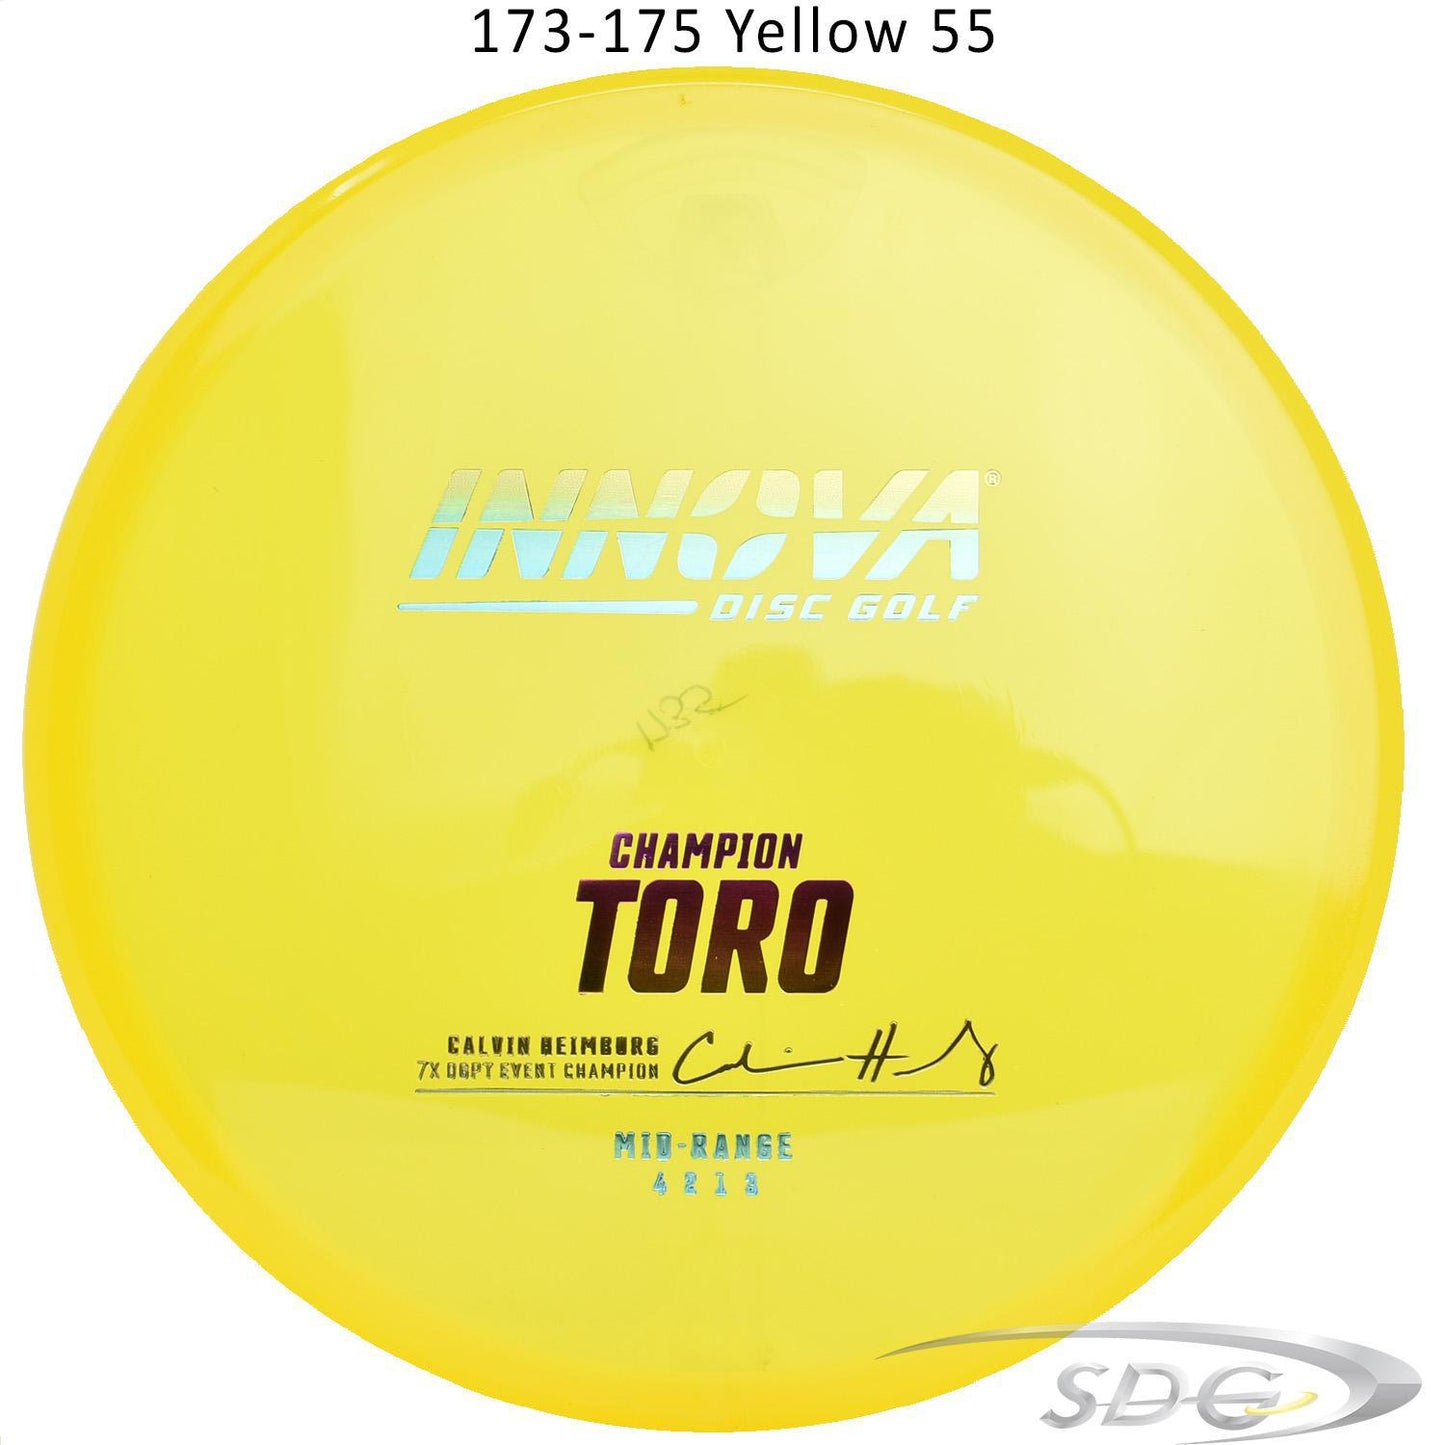 innova-champion-toro-calvin-heimburg-signature-disc-golf-mid-range 173-175 Yellow 55 